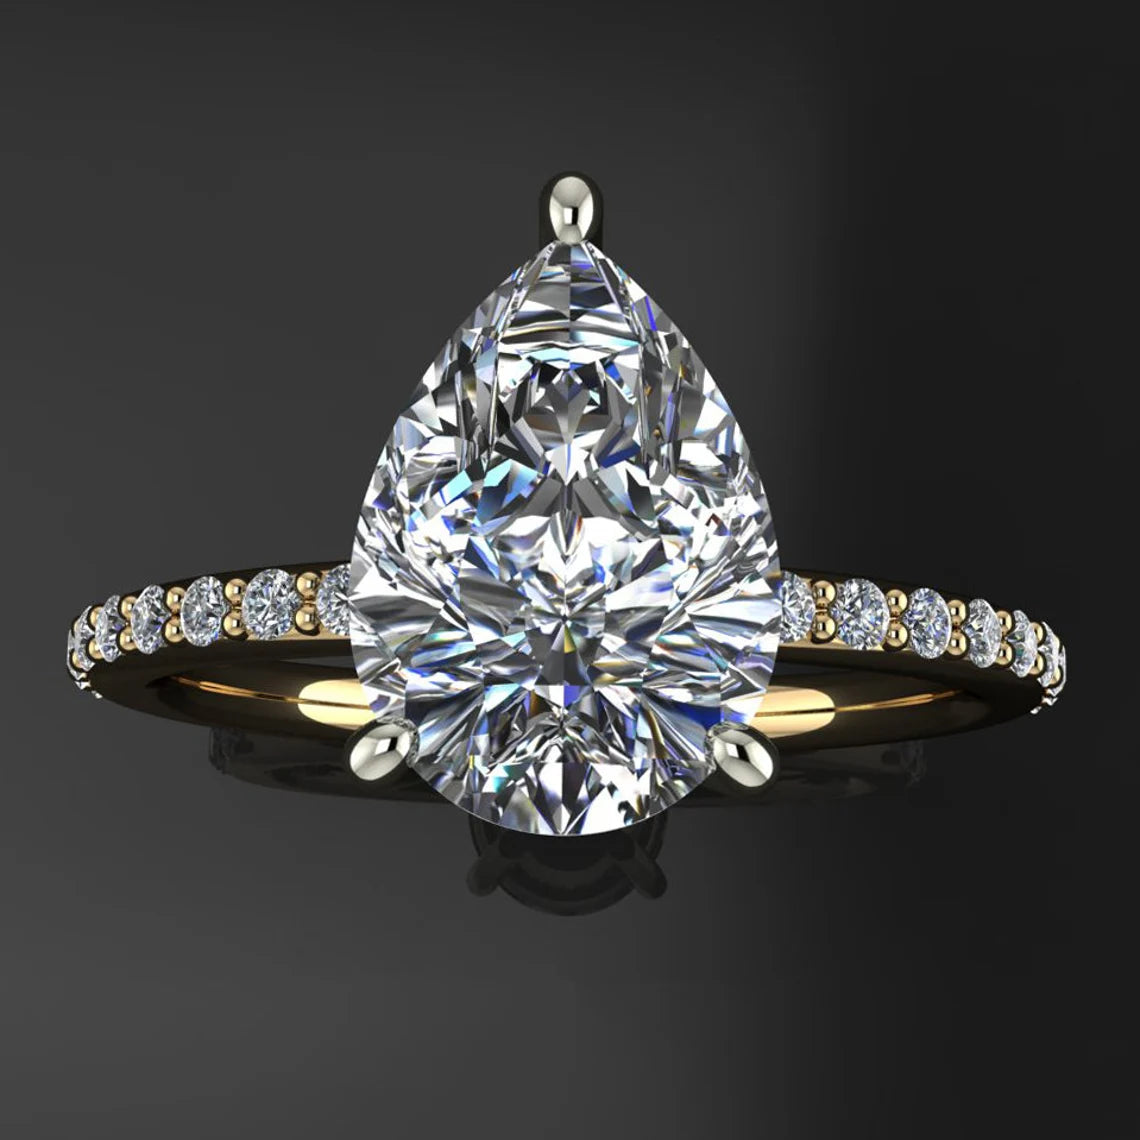 eliza ring - 2 carat pear cut NEO moissanite engagement ring, diamond pave shank - J Hollywood Designs